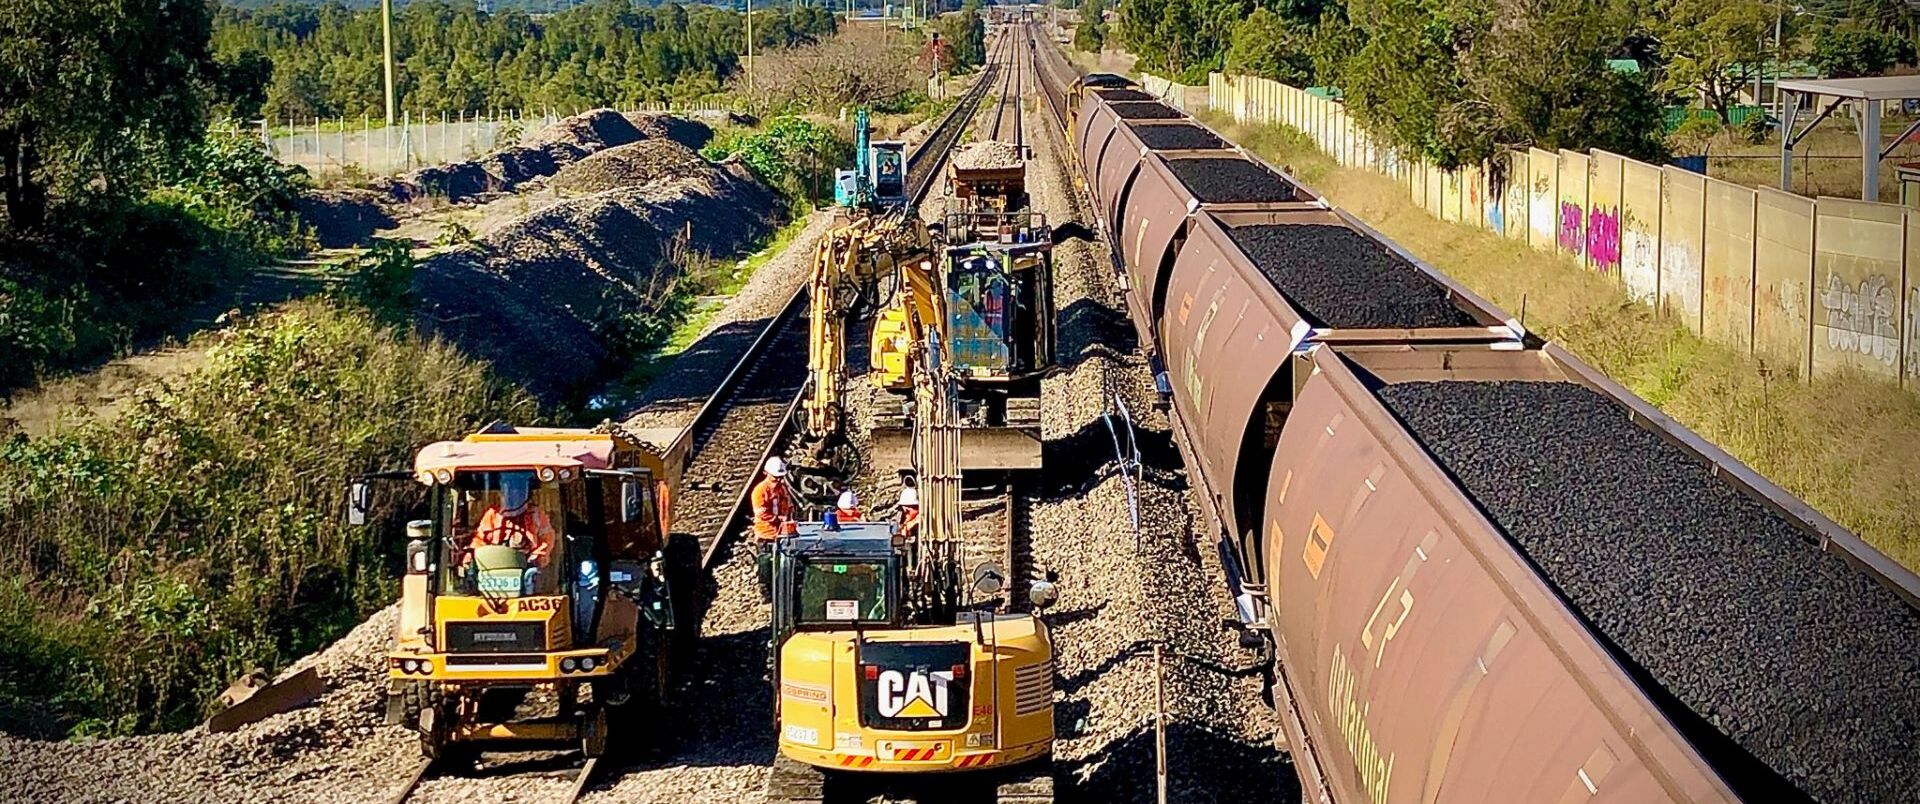 Rail Safeworking